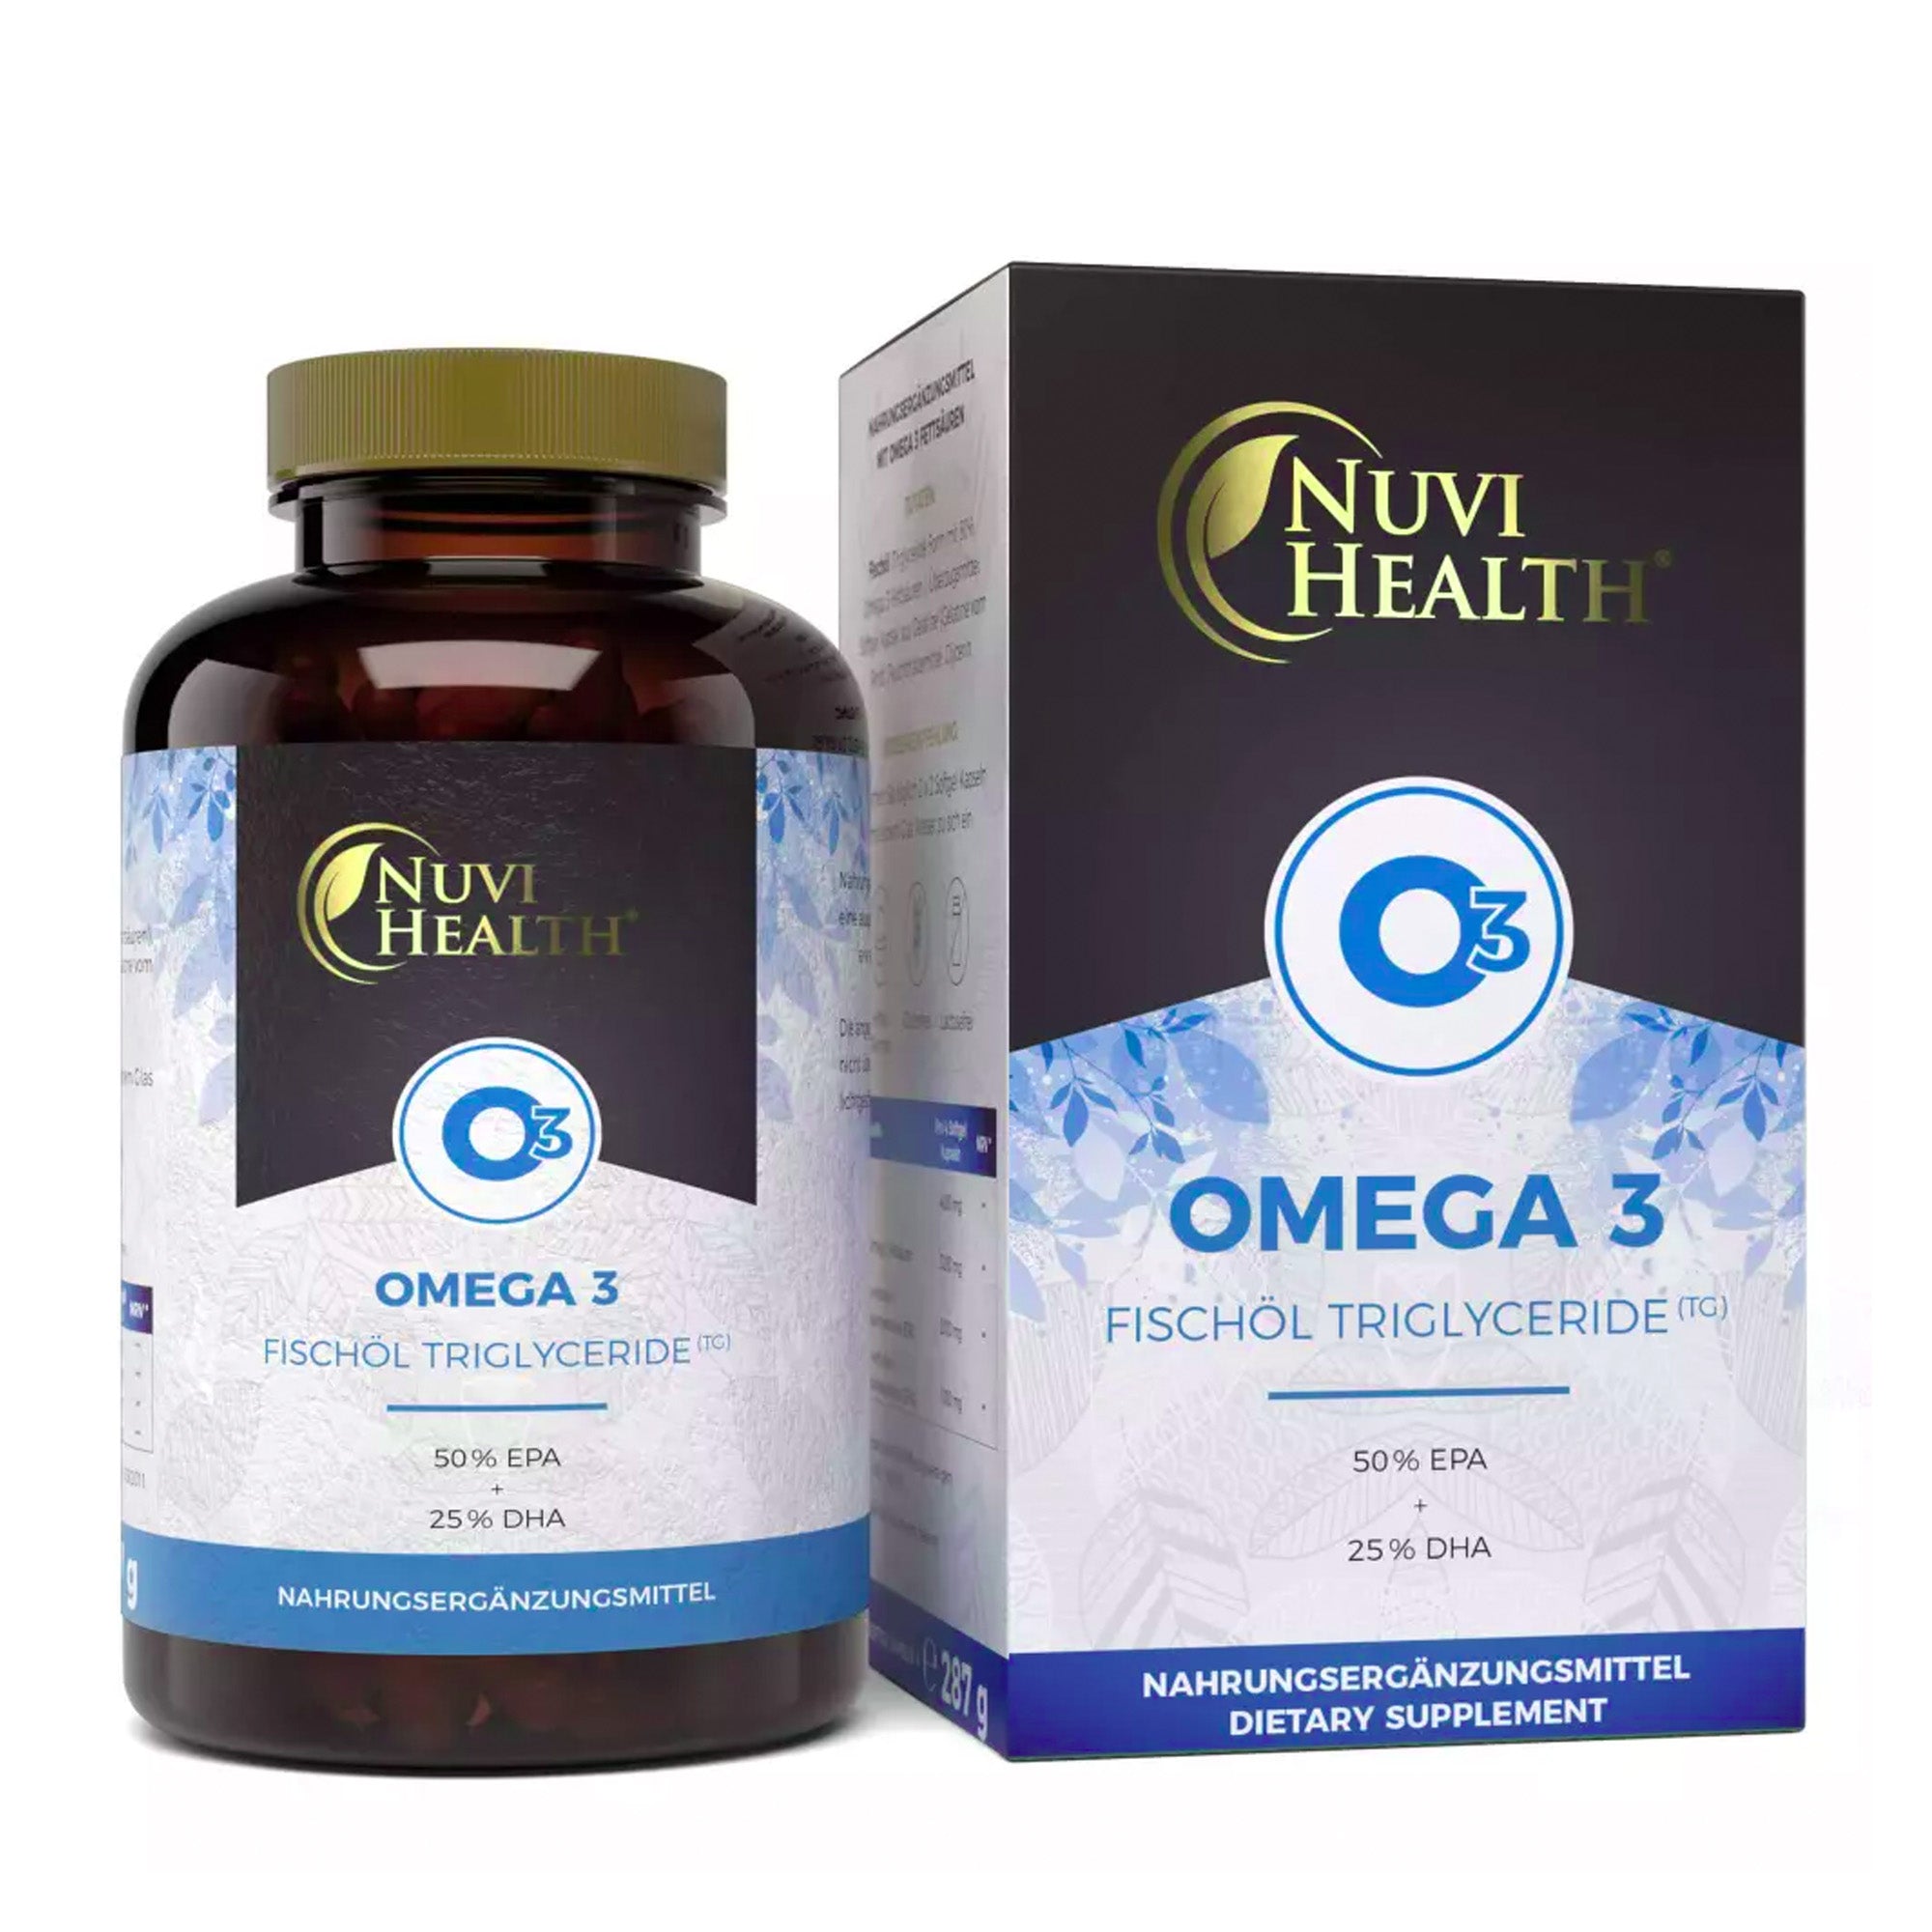 Omega 3 visolie triglyceridenvorm | 240 Capsules | Nuvi health